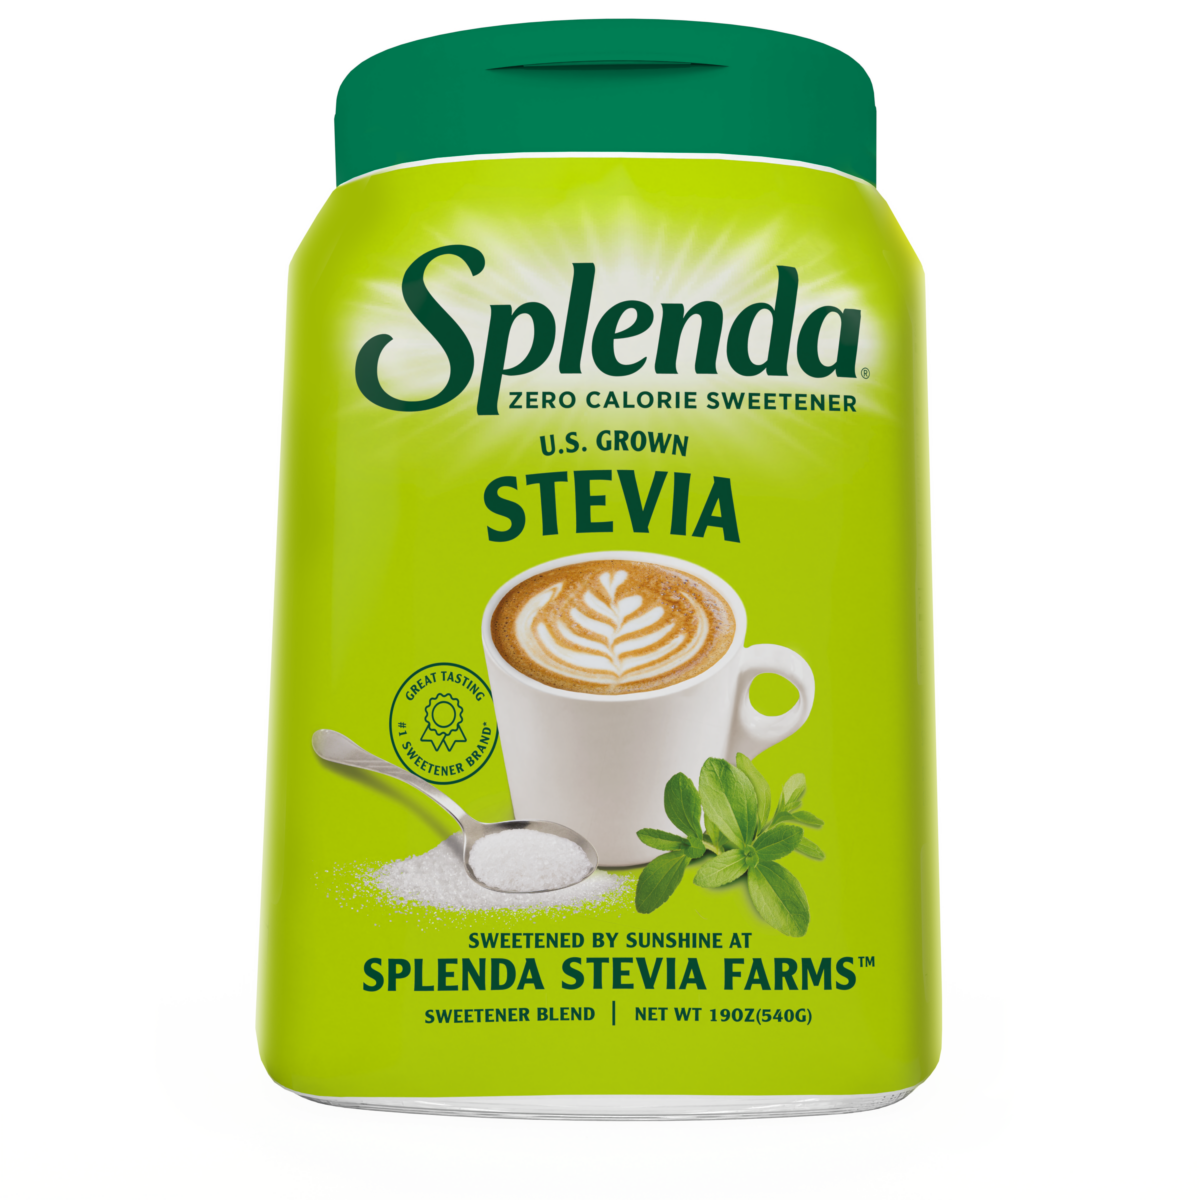 Splenda U.S. Grown Stevia Large Jar - Front